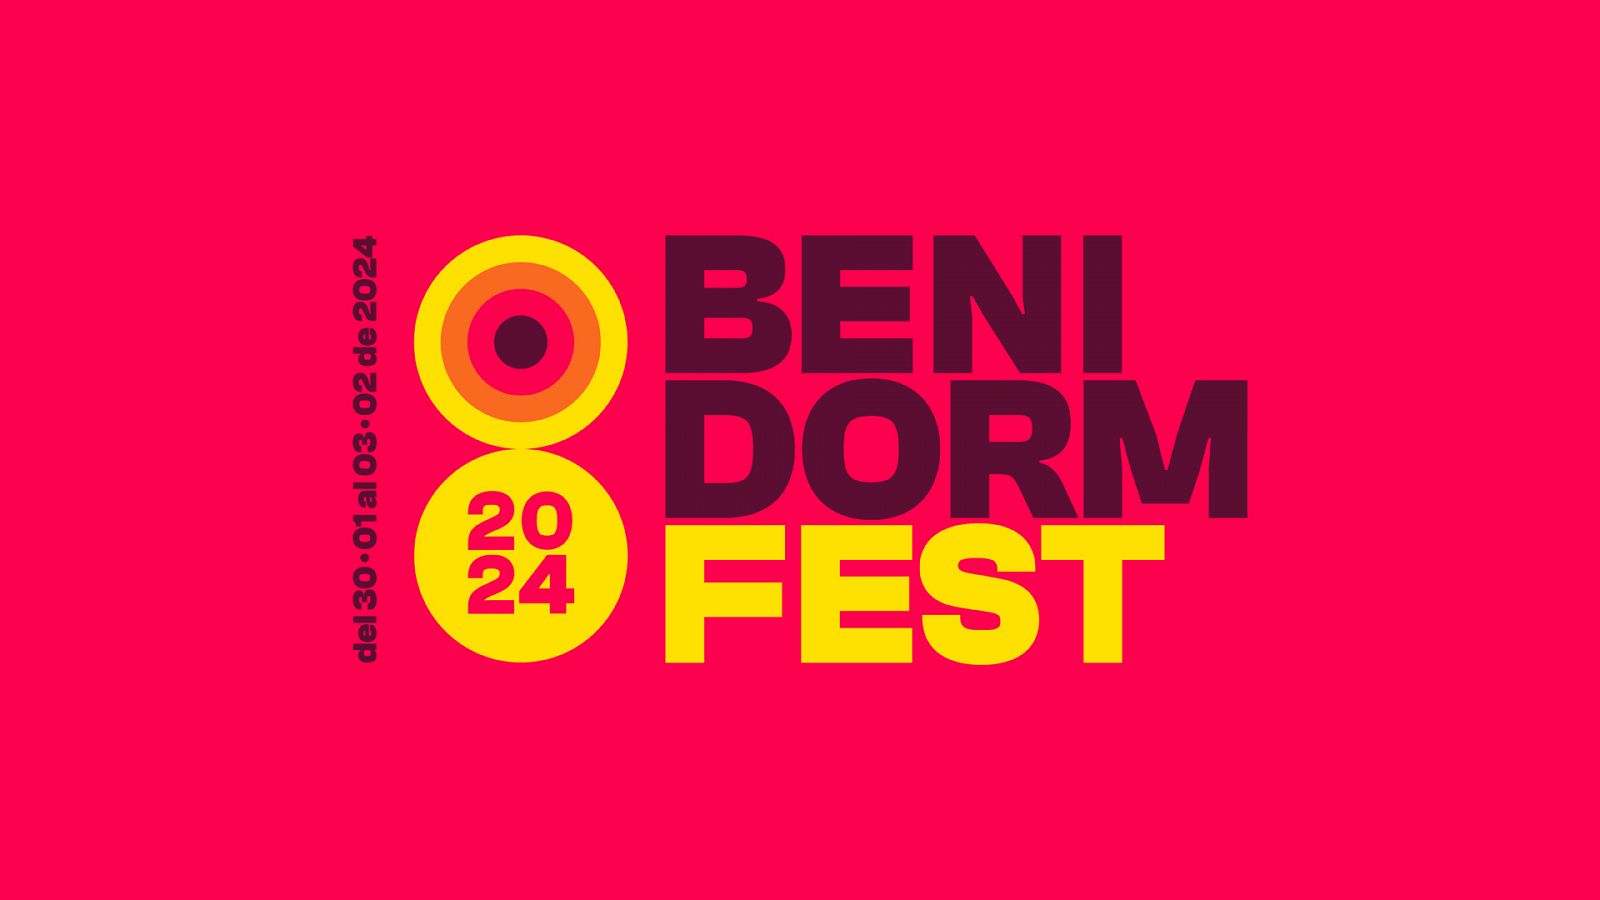 Nuevo logotipo del Benidorm Fest 2024 con fondo rojo